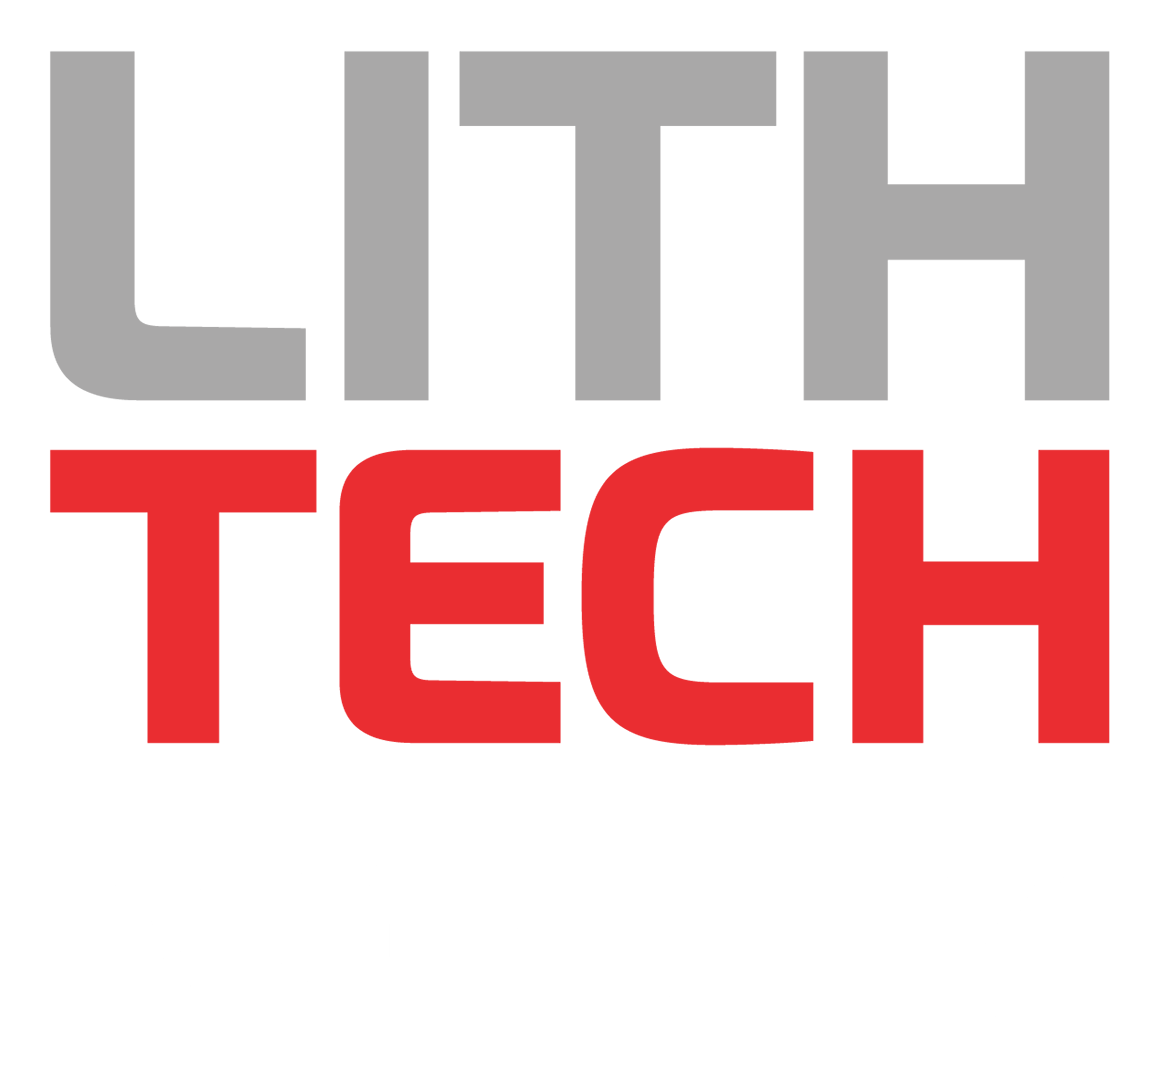 LITH-TECH Mobility